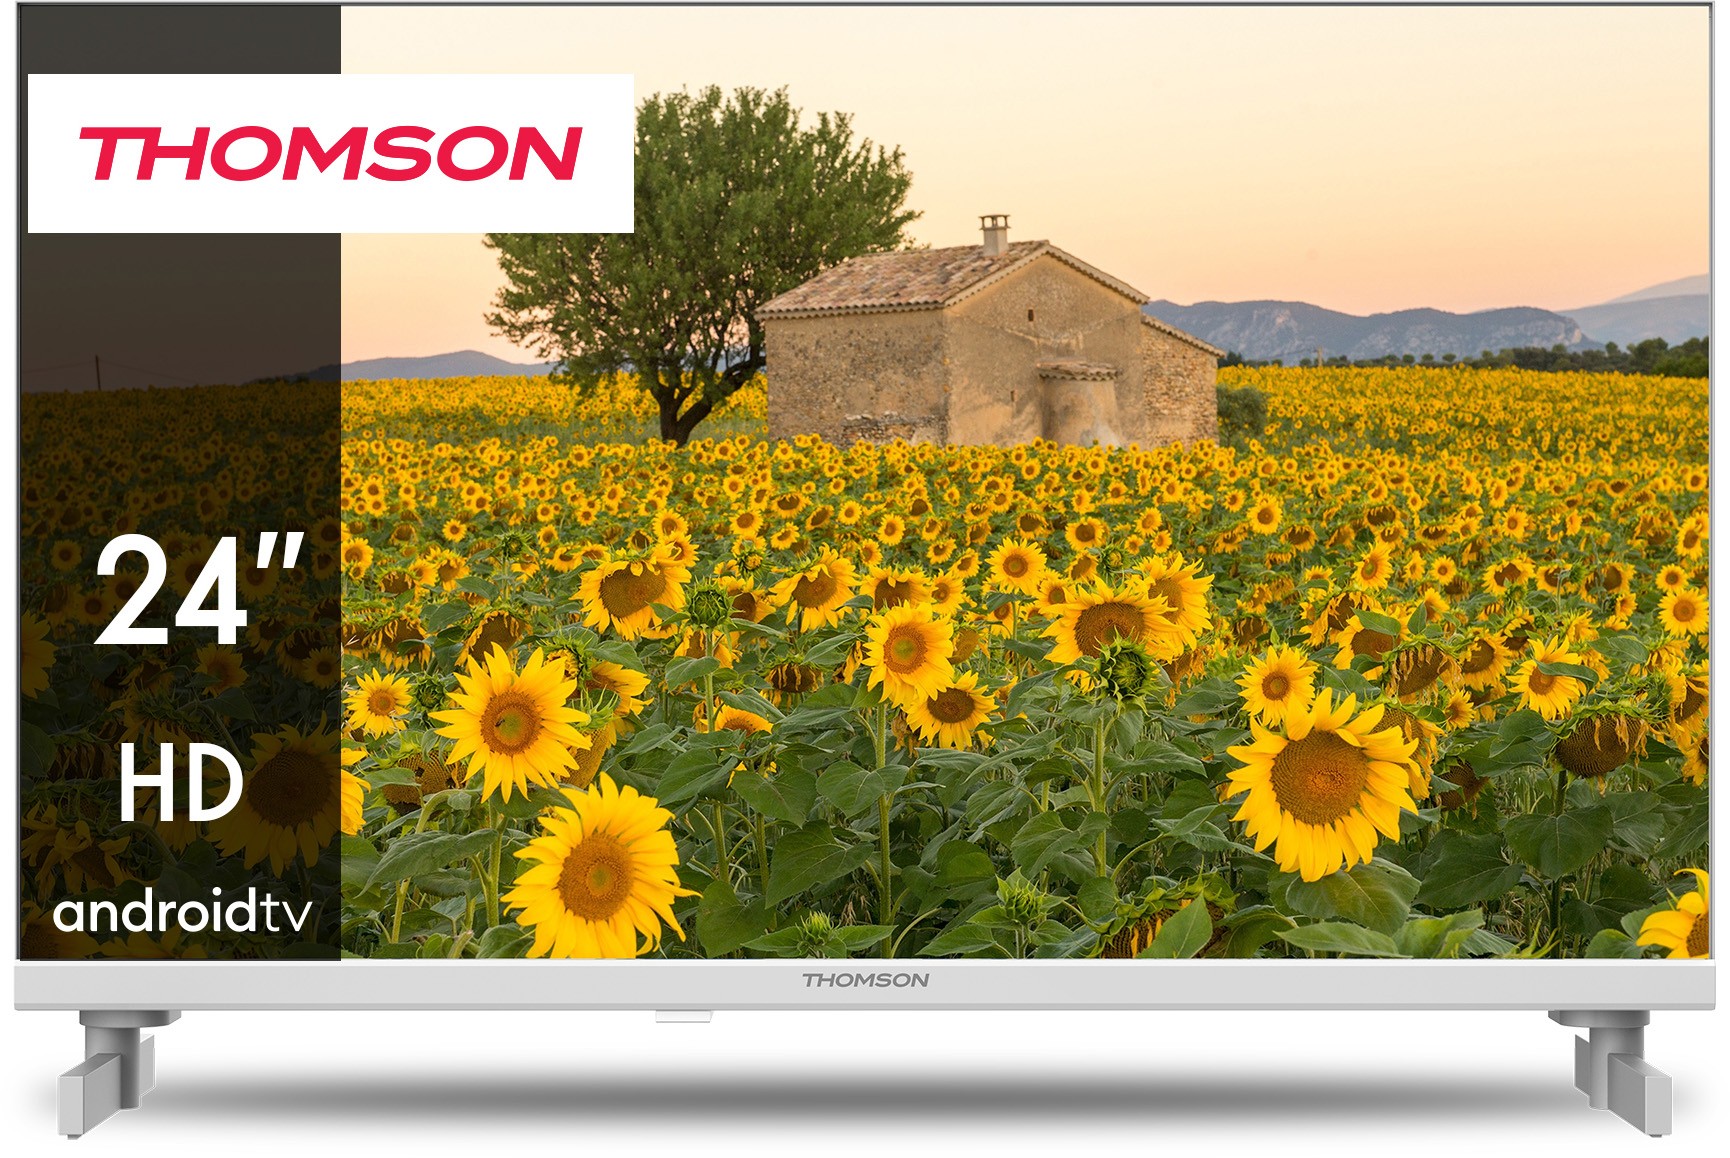 THOMSON TV LCD 60 cm 60 Hz Android TV 24" - 24HA2S13CW